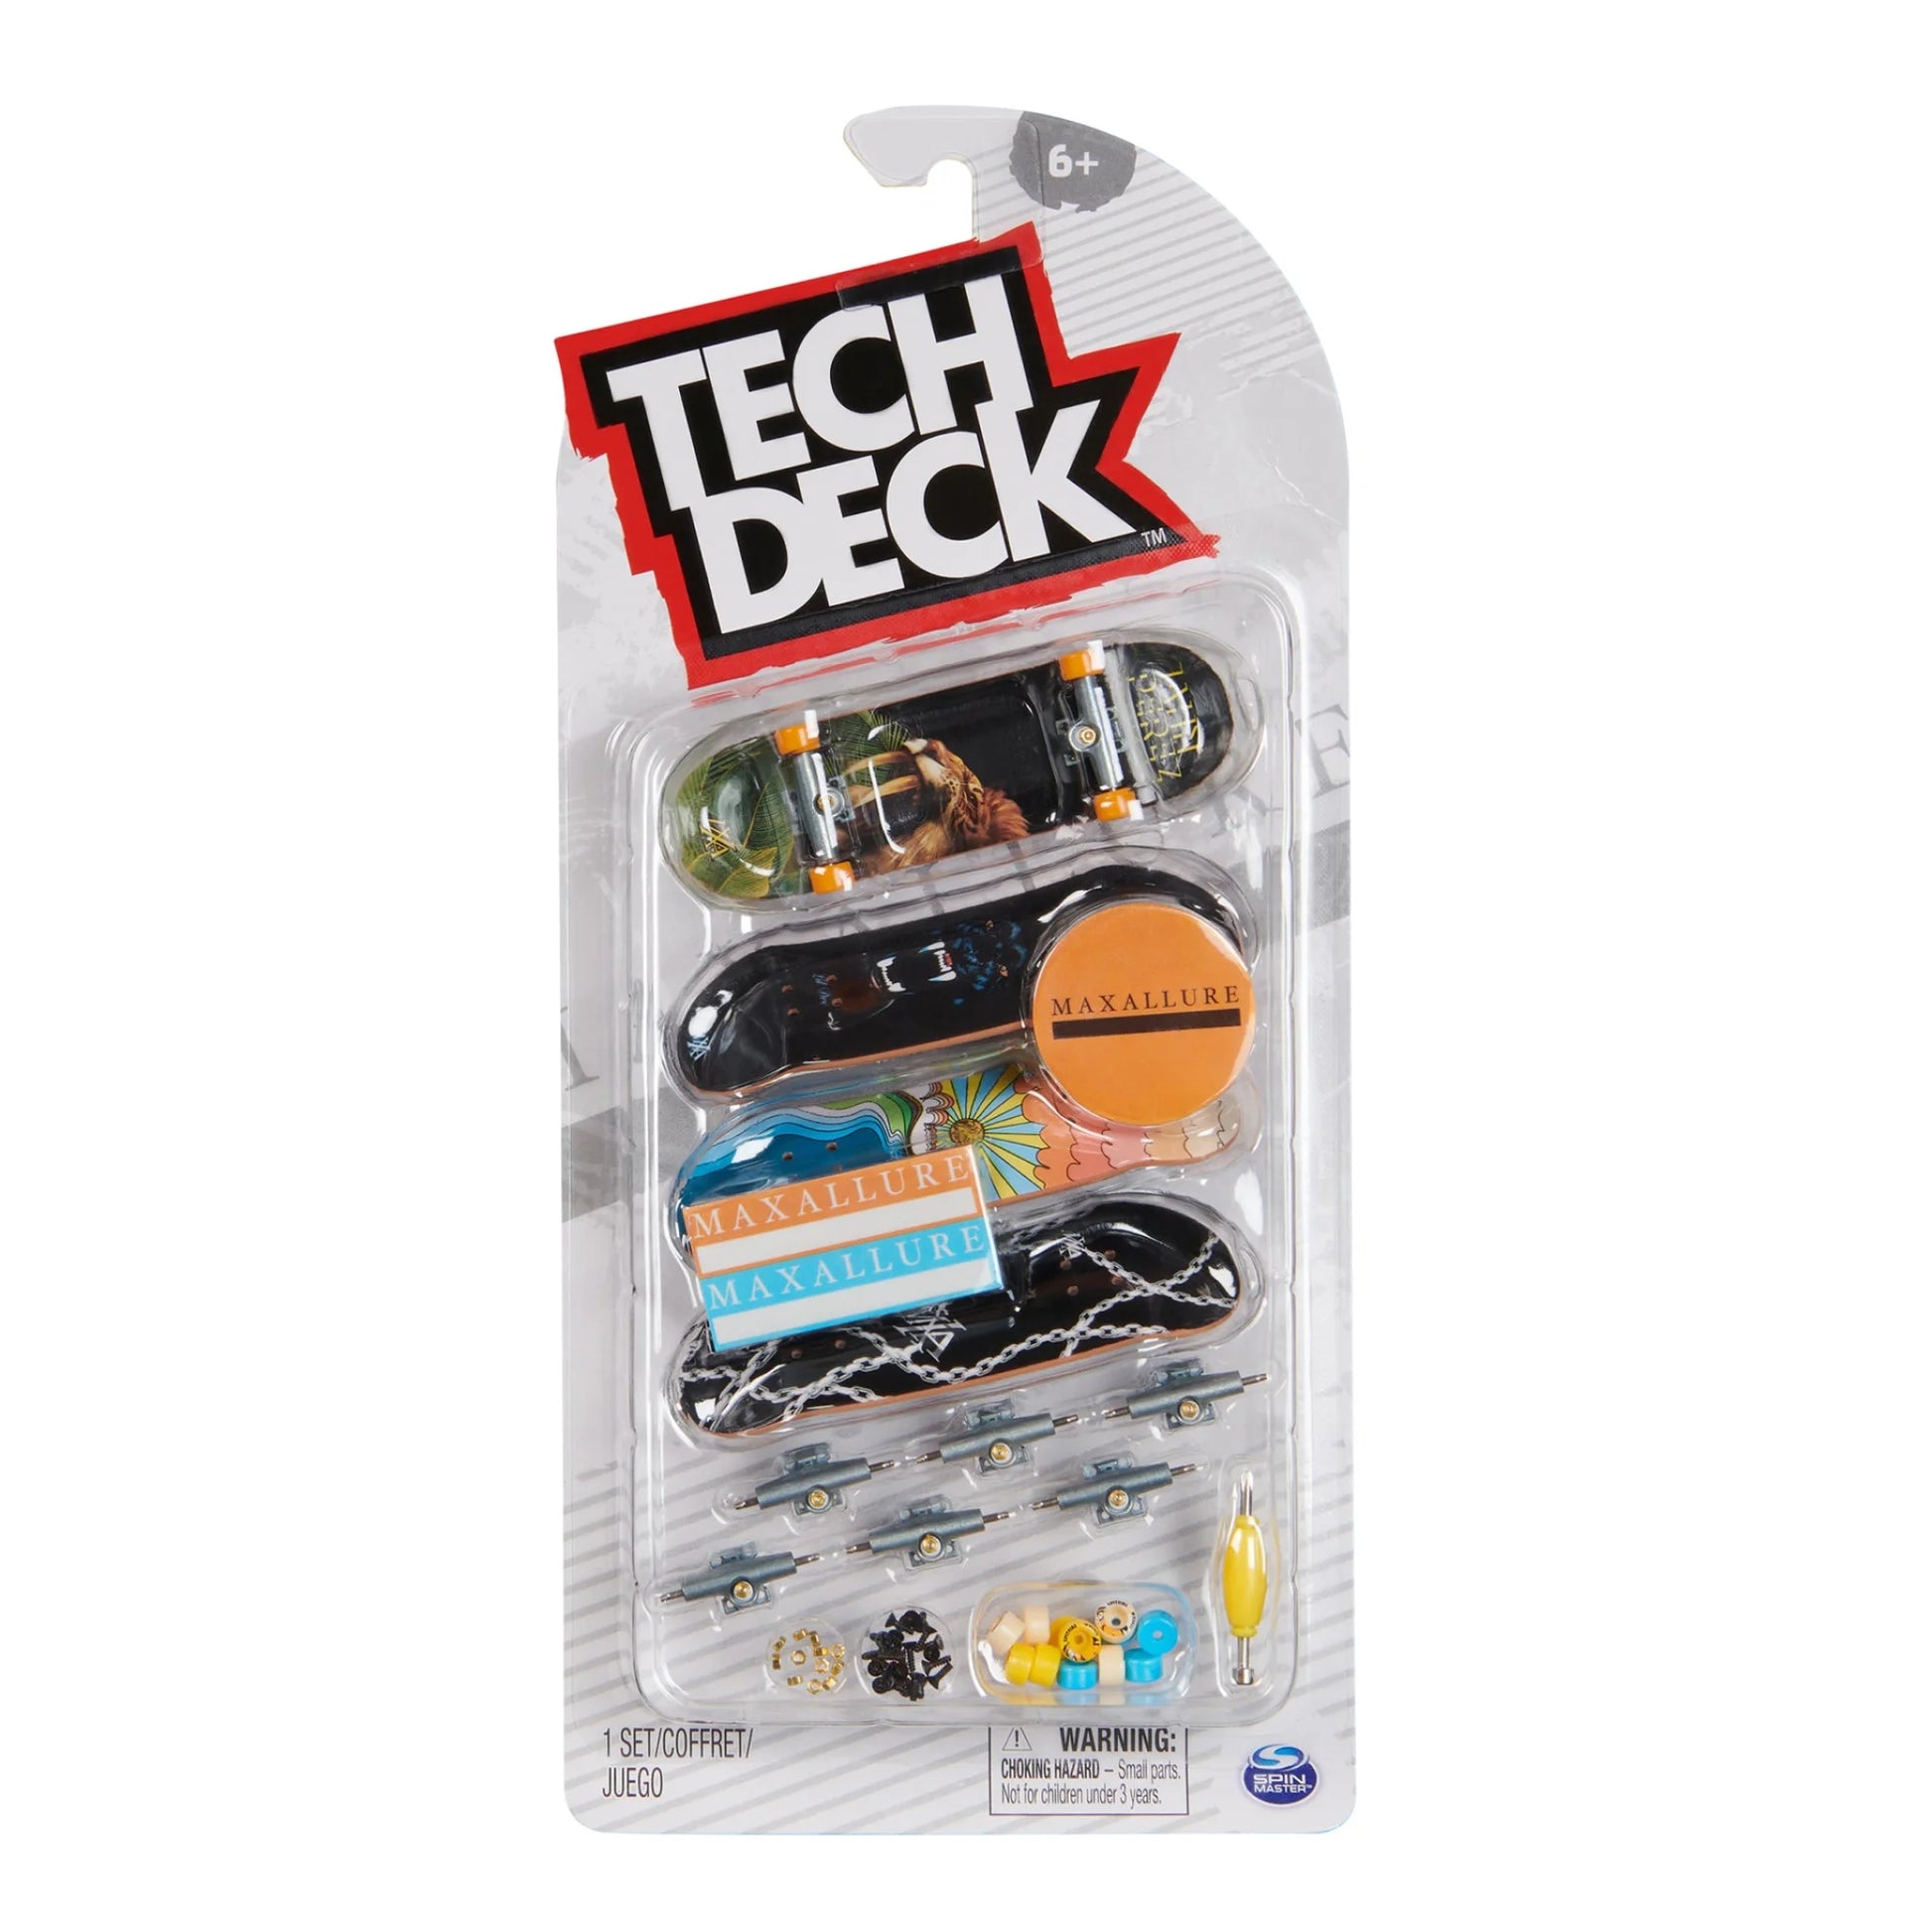 Tech Deck - Deluxe Maxallure Fingerboard 4 Pack (M32) - 96mm - Prime Delux Store